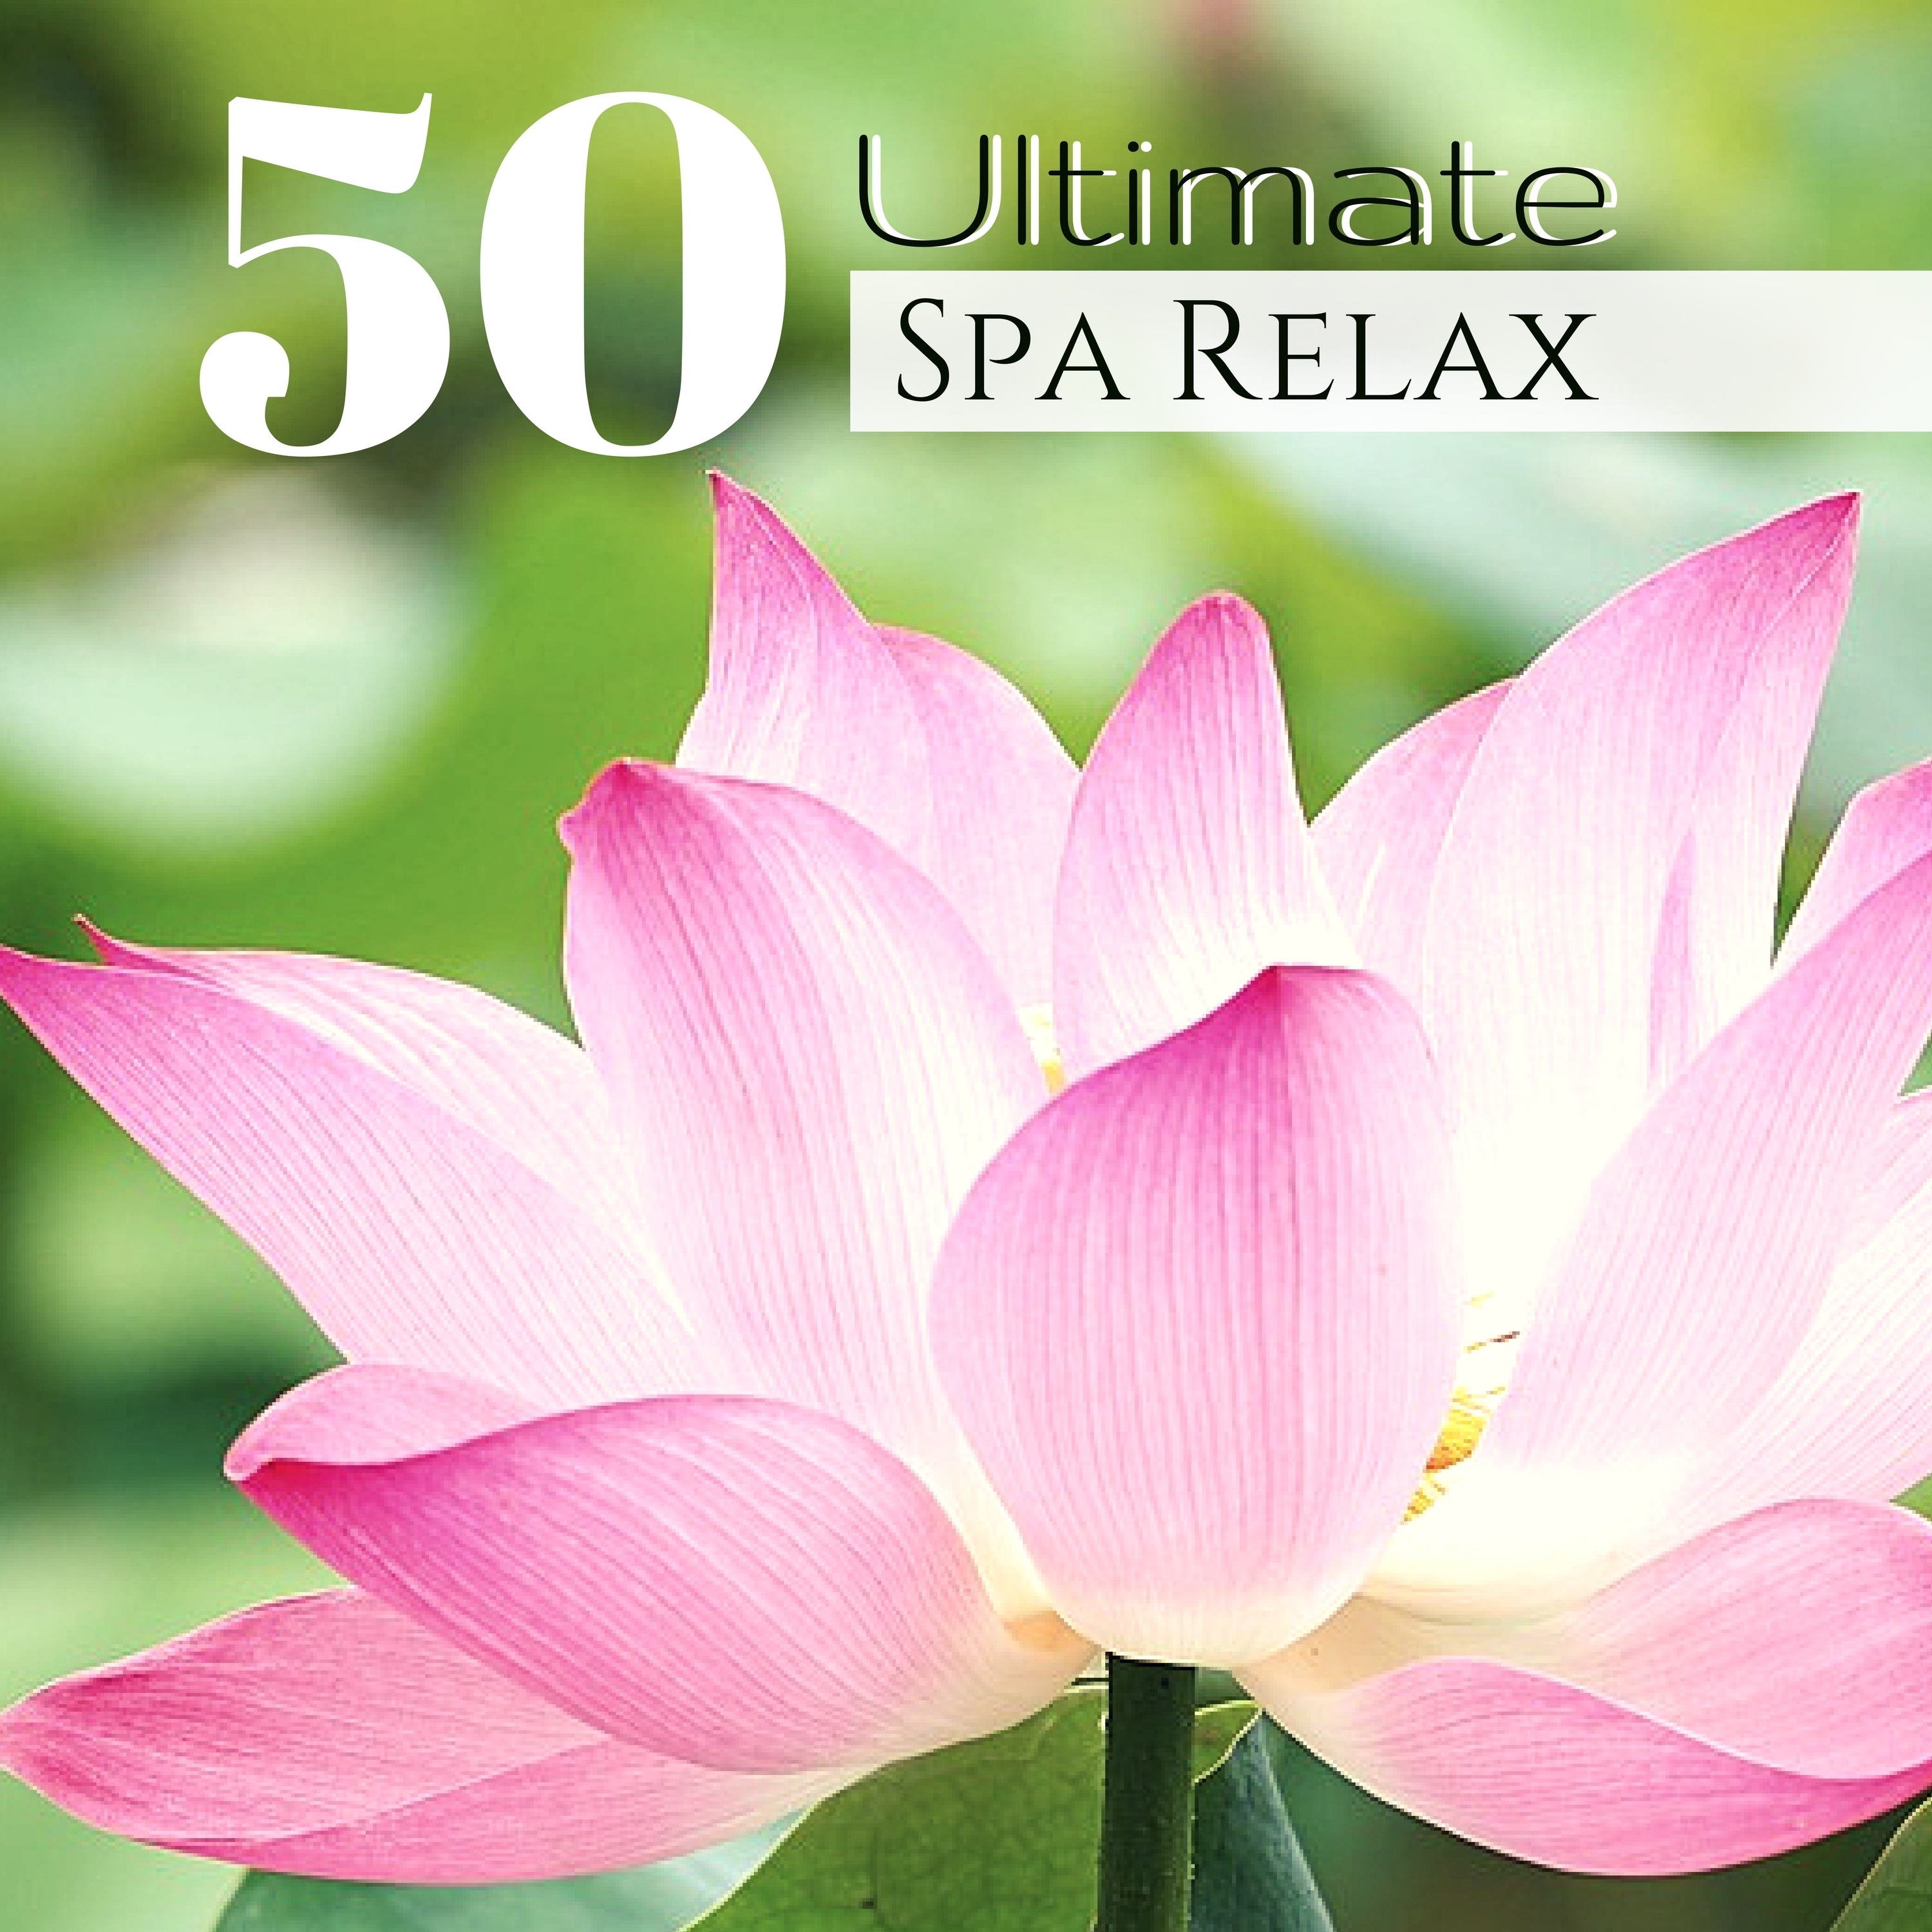 50 Ultimate Spa Relax - Zen Lotus Garden Meditation Music Collection